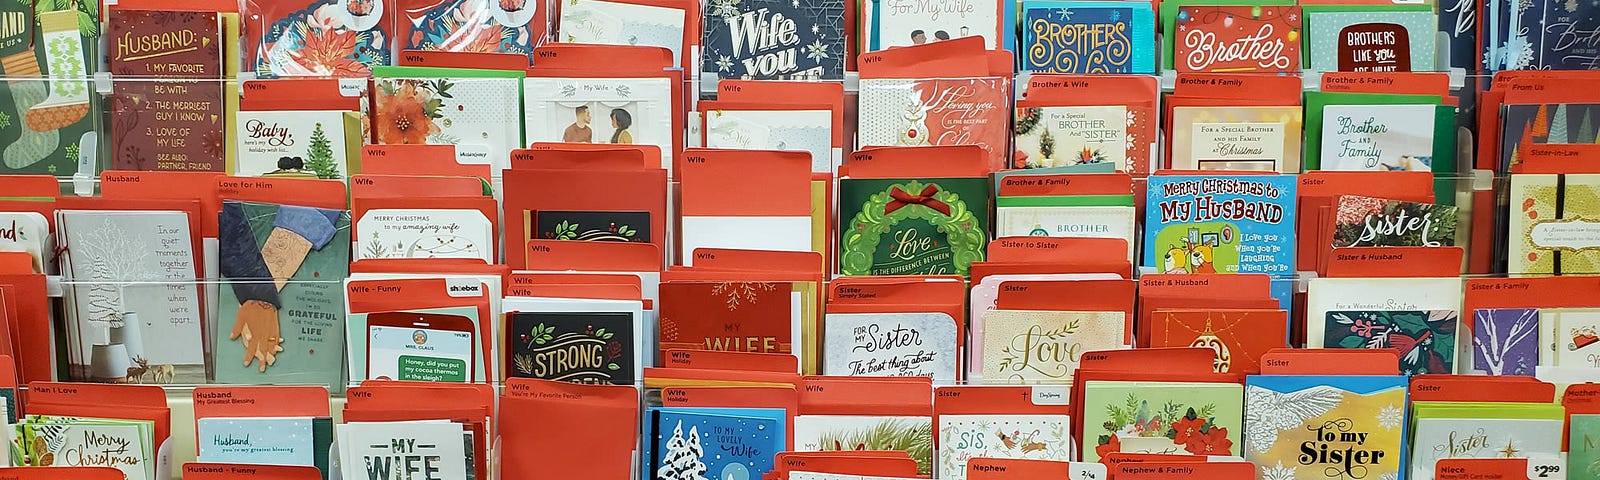 Image of Christmas card rack at local Hallmark store week before Christmas